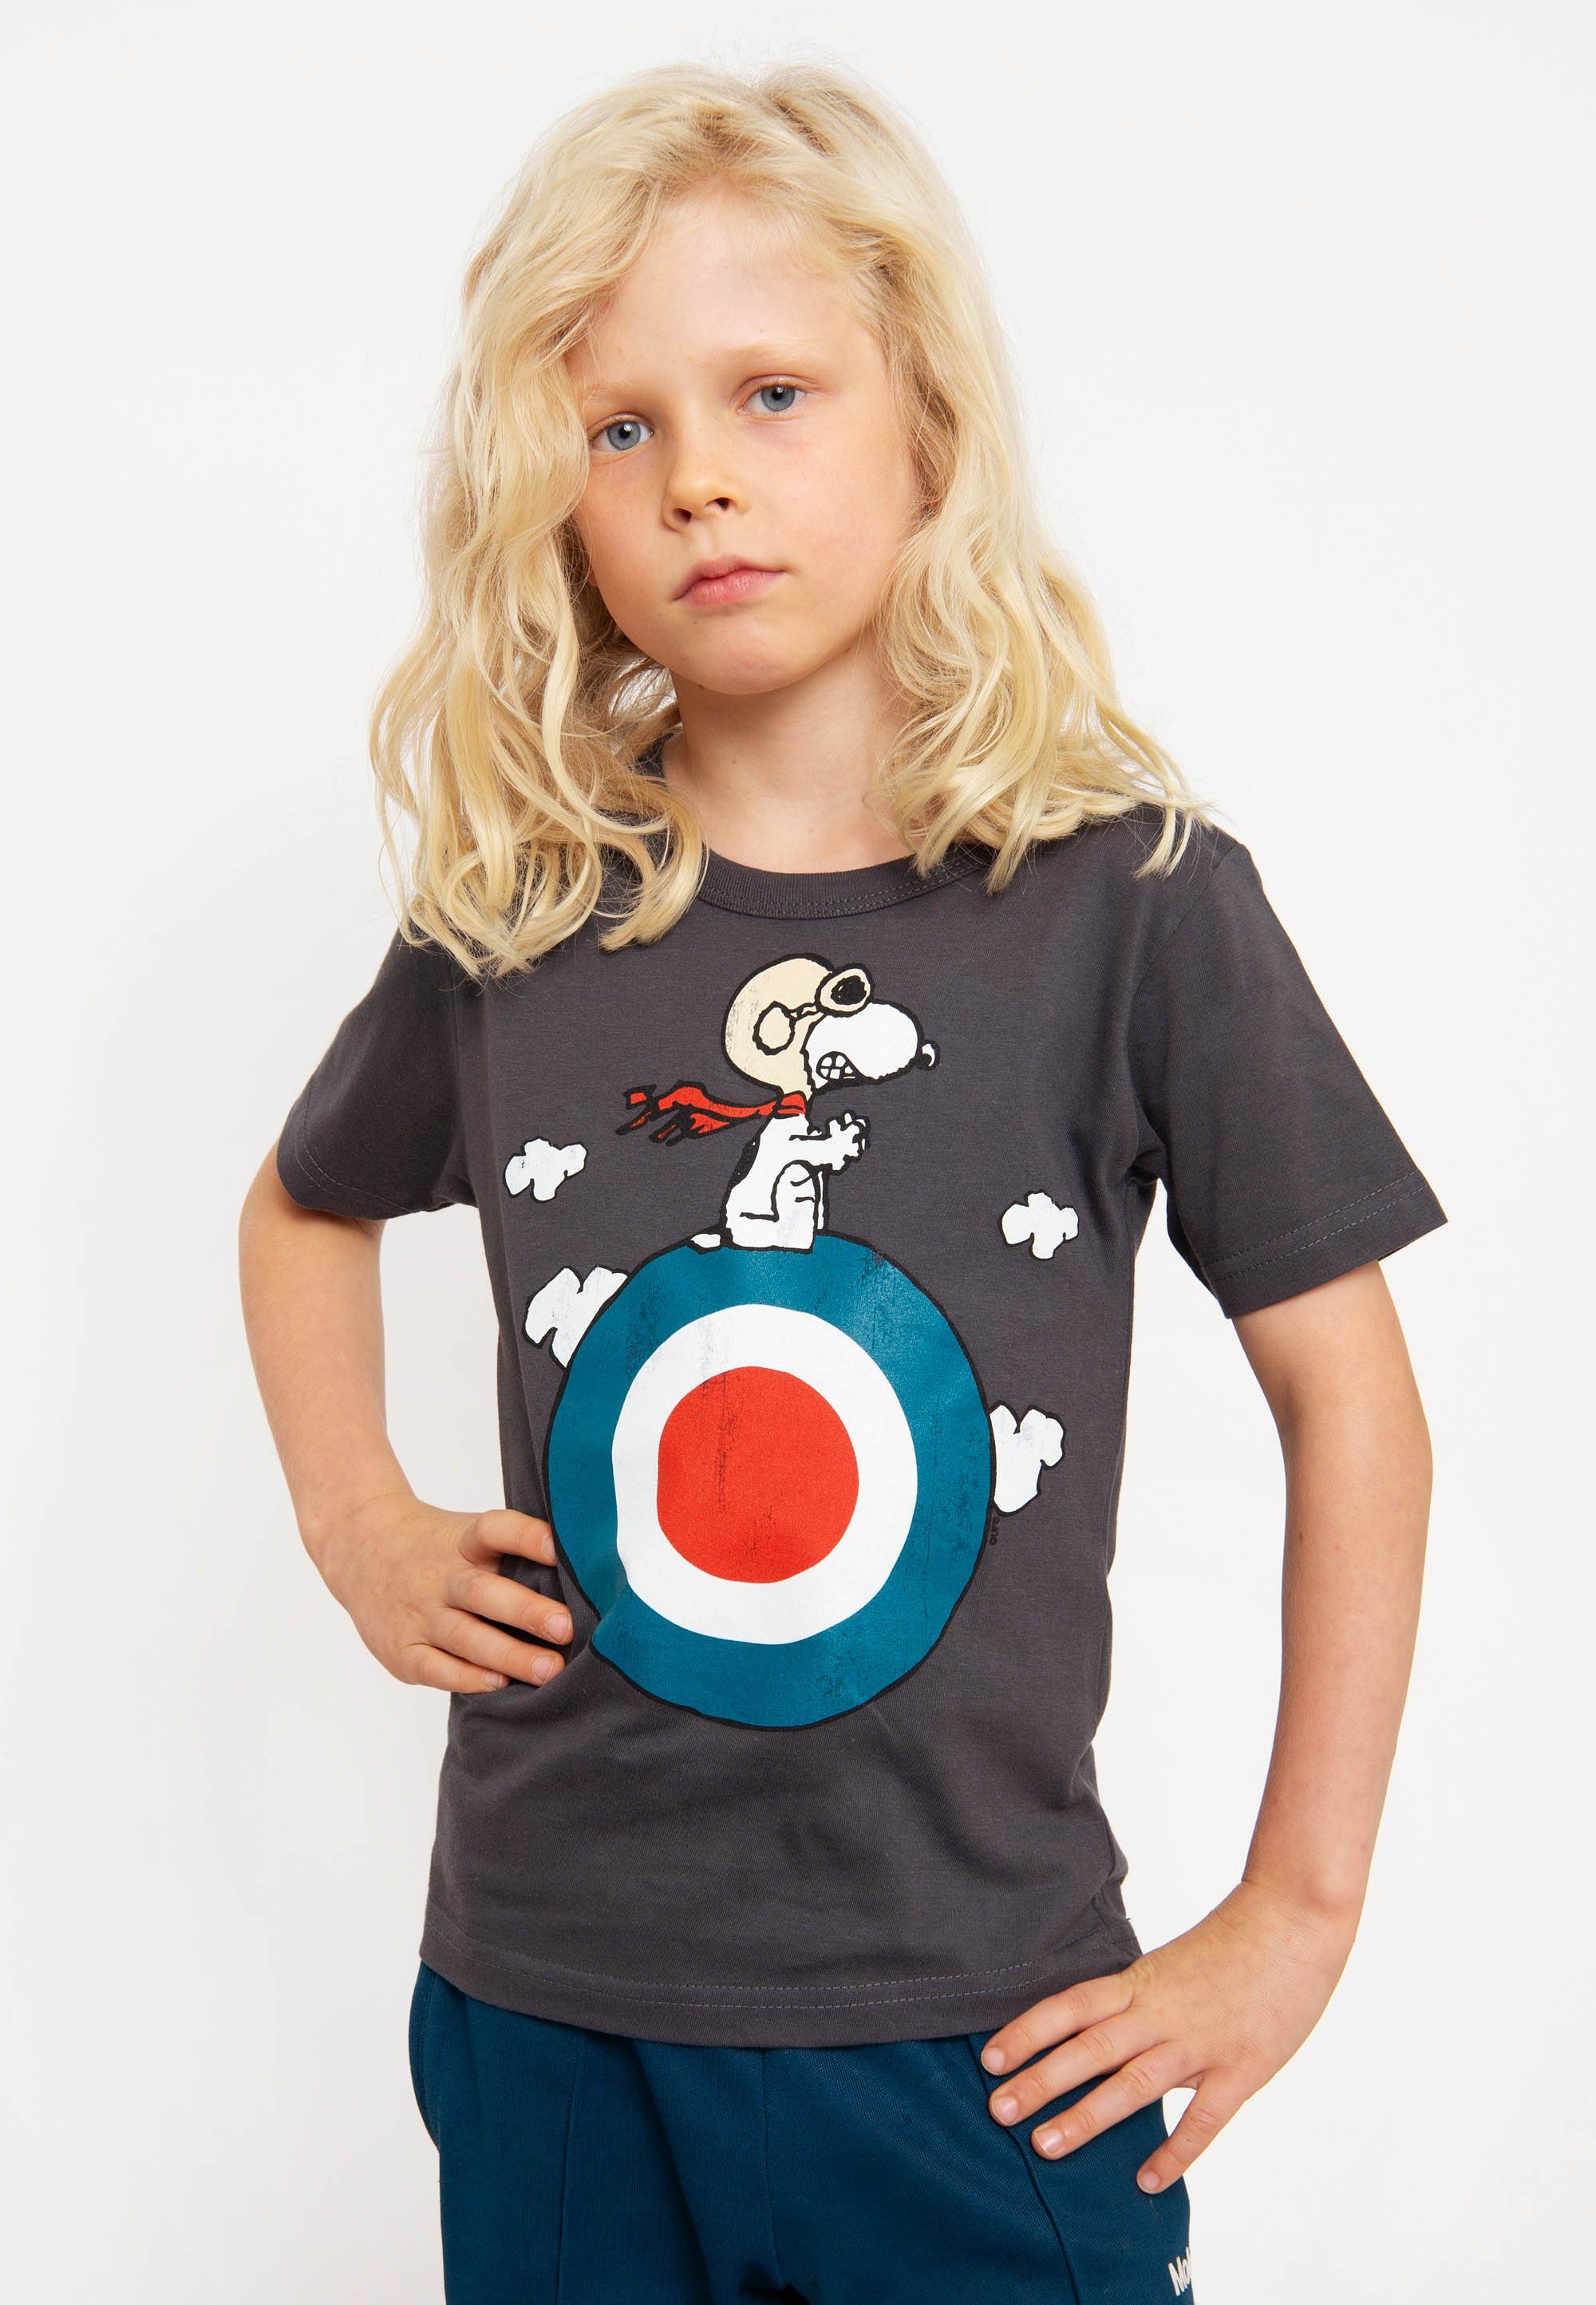 LOGOSHIRT T-Shirt Peanuts - Snoopy Print mit lizenziertem